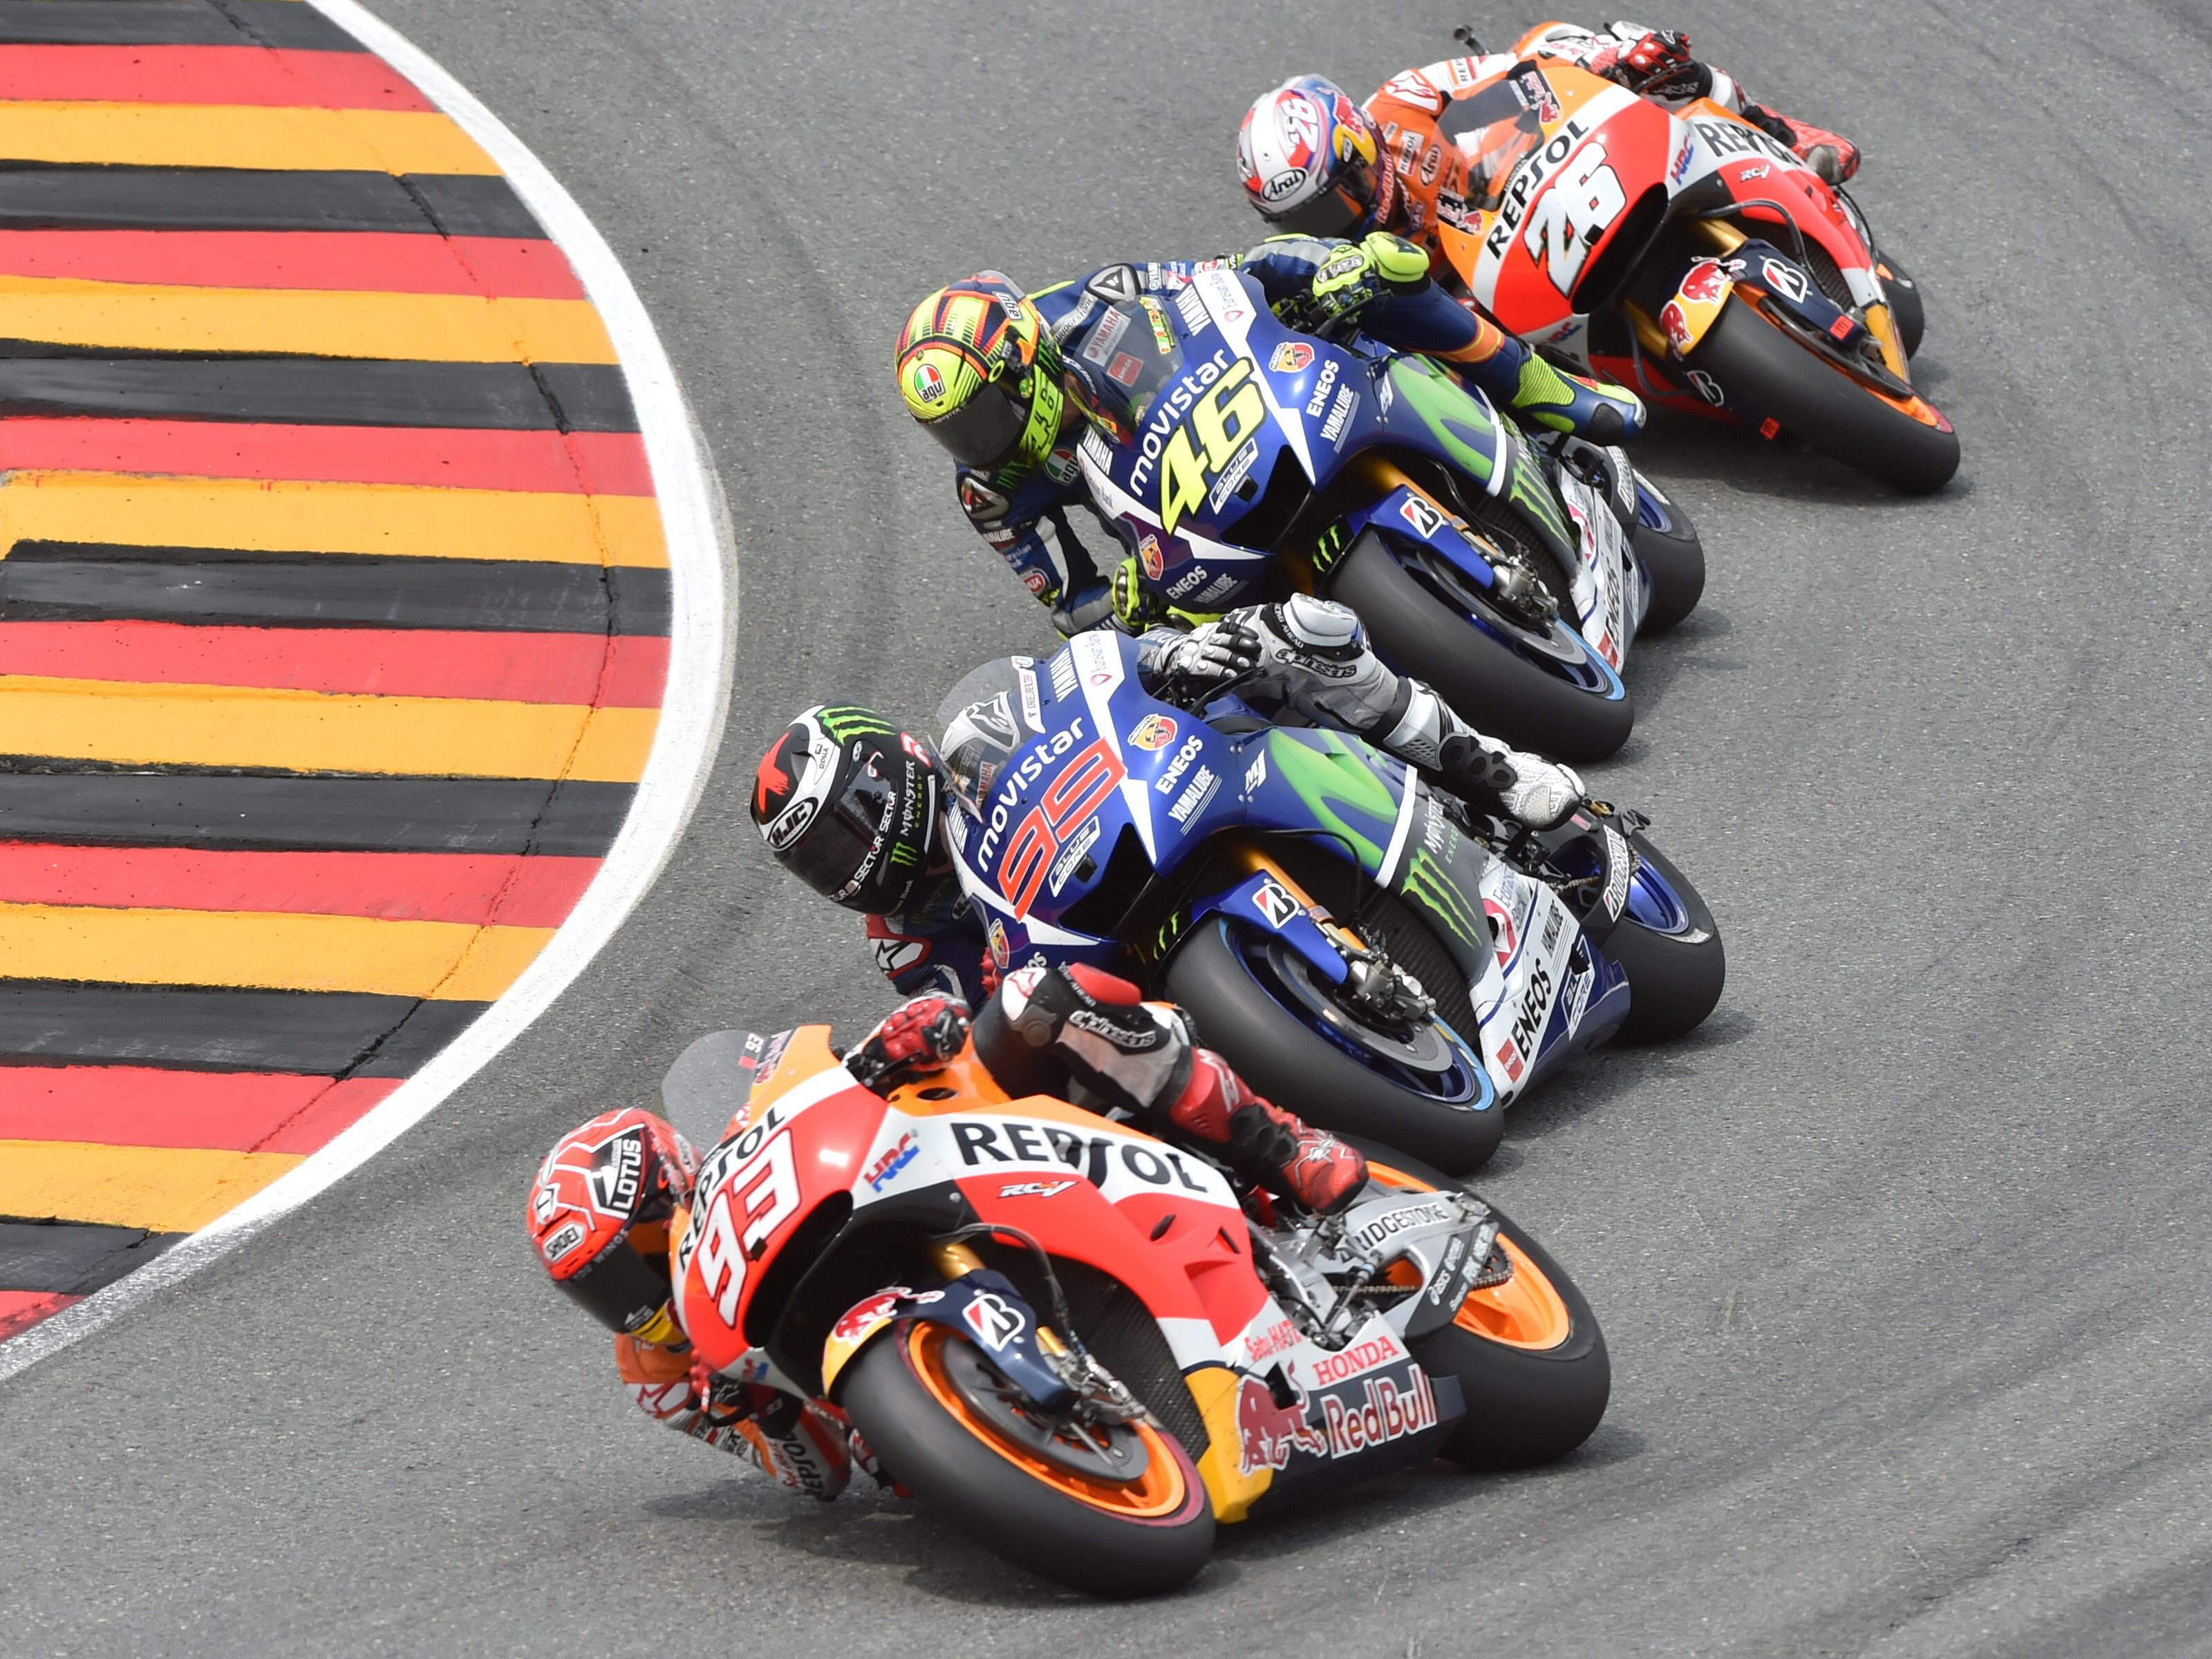 MotoGP – Γερμανία 2015: Νίκη Marquez, βάθρο για Pedrosa και Rossi